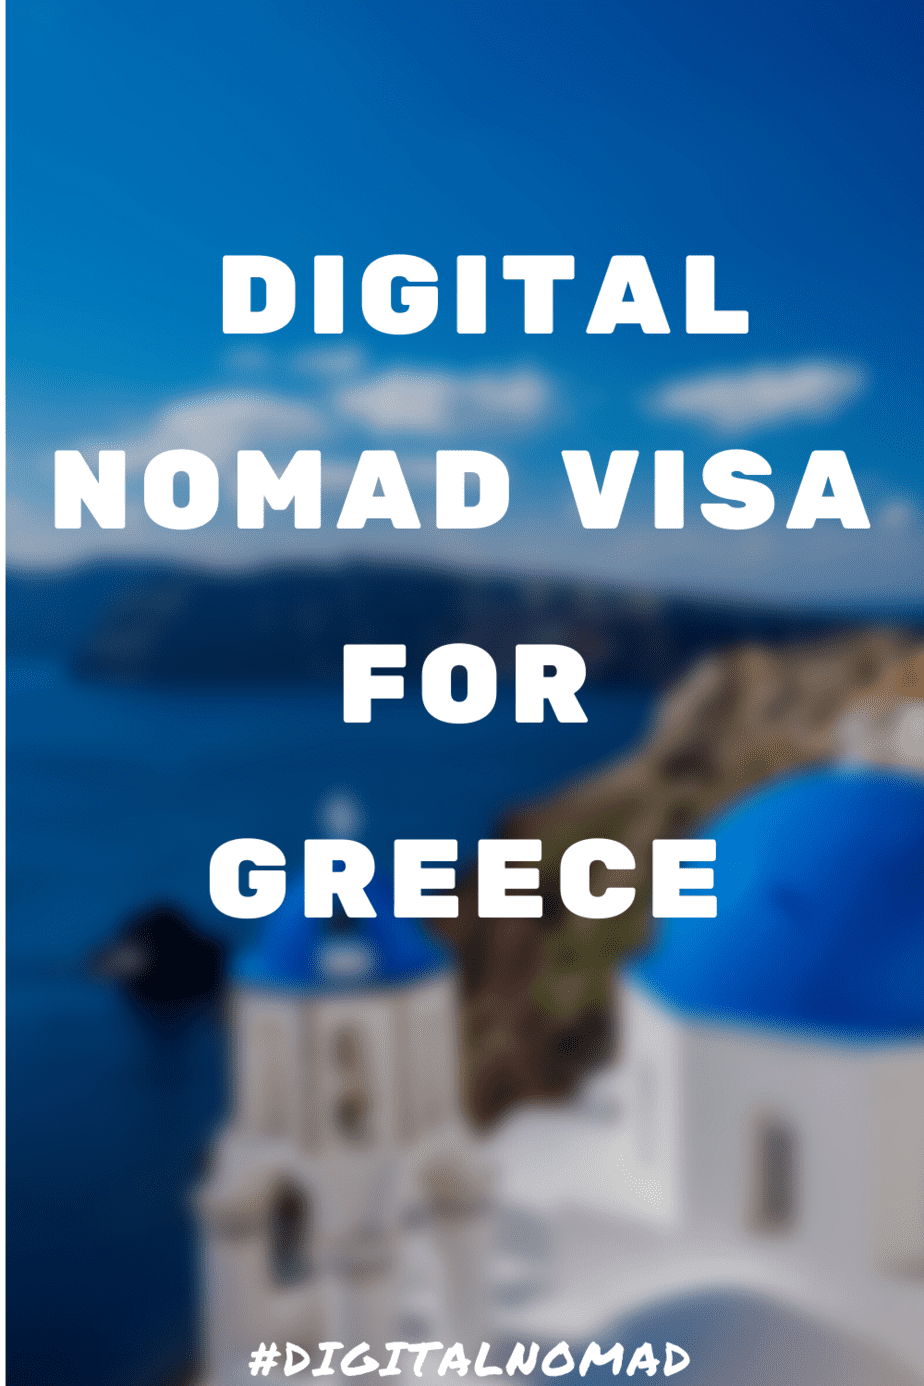 Greece digital nomad visa